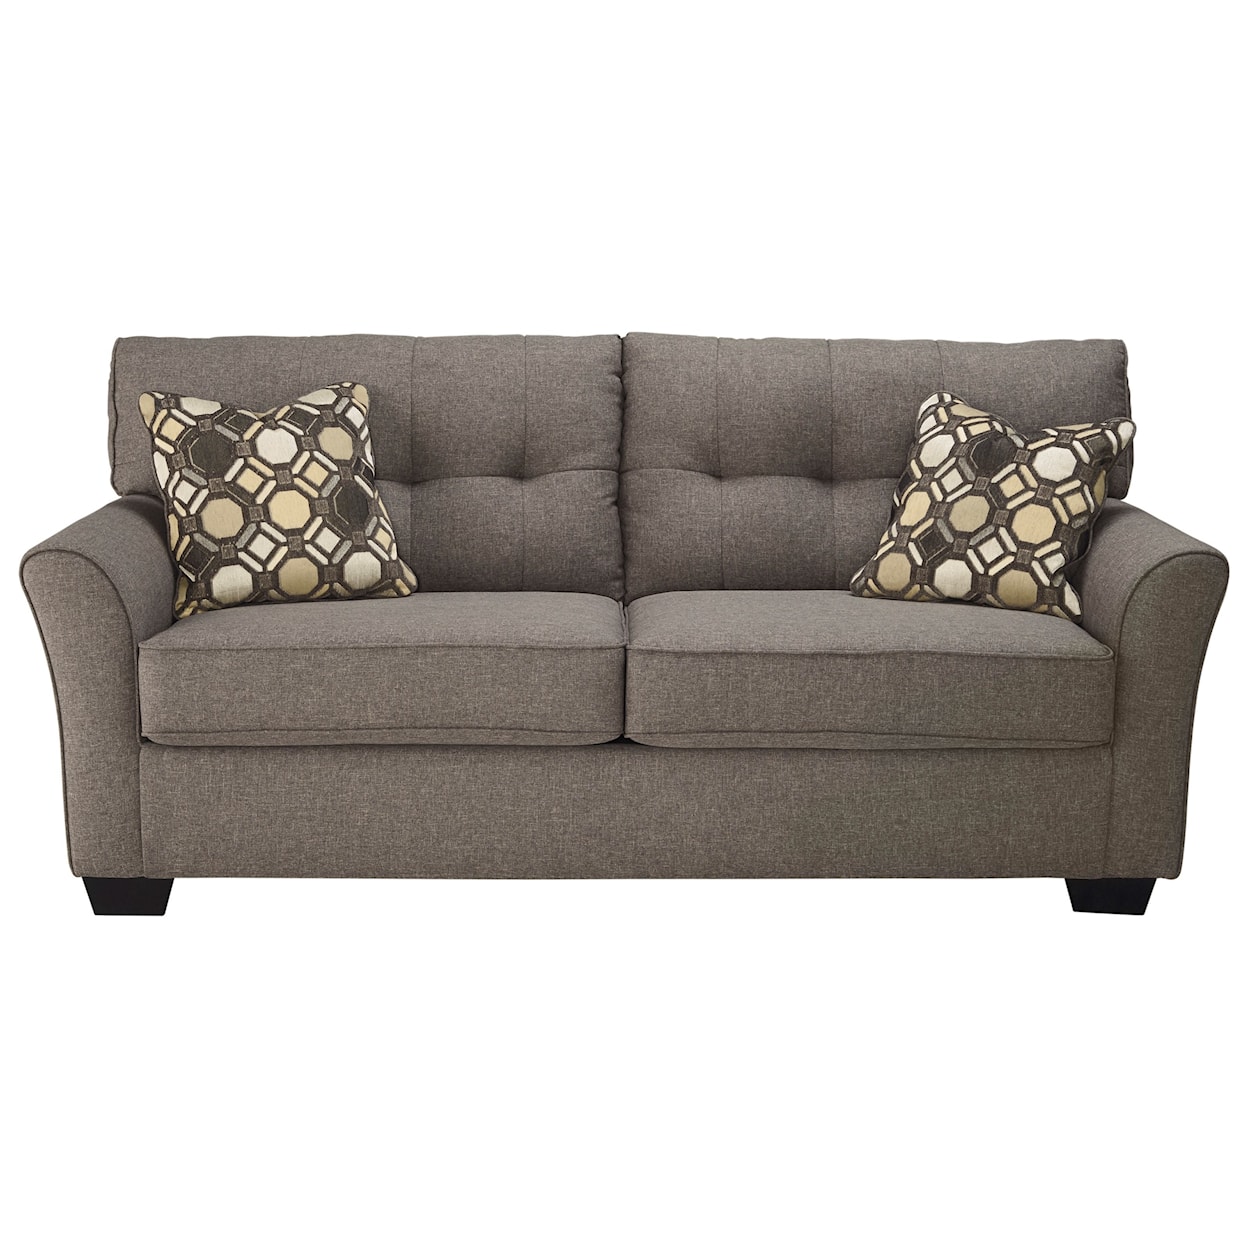 Ashley Furniture Signature Design Tibbee Full Sofa Sleeper